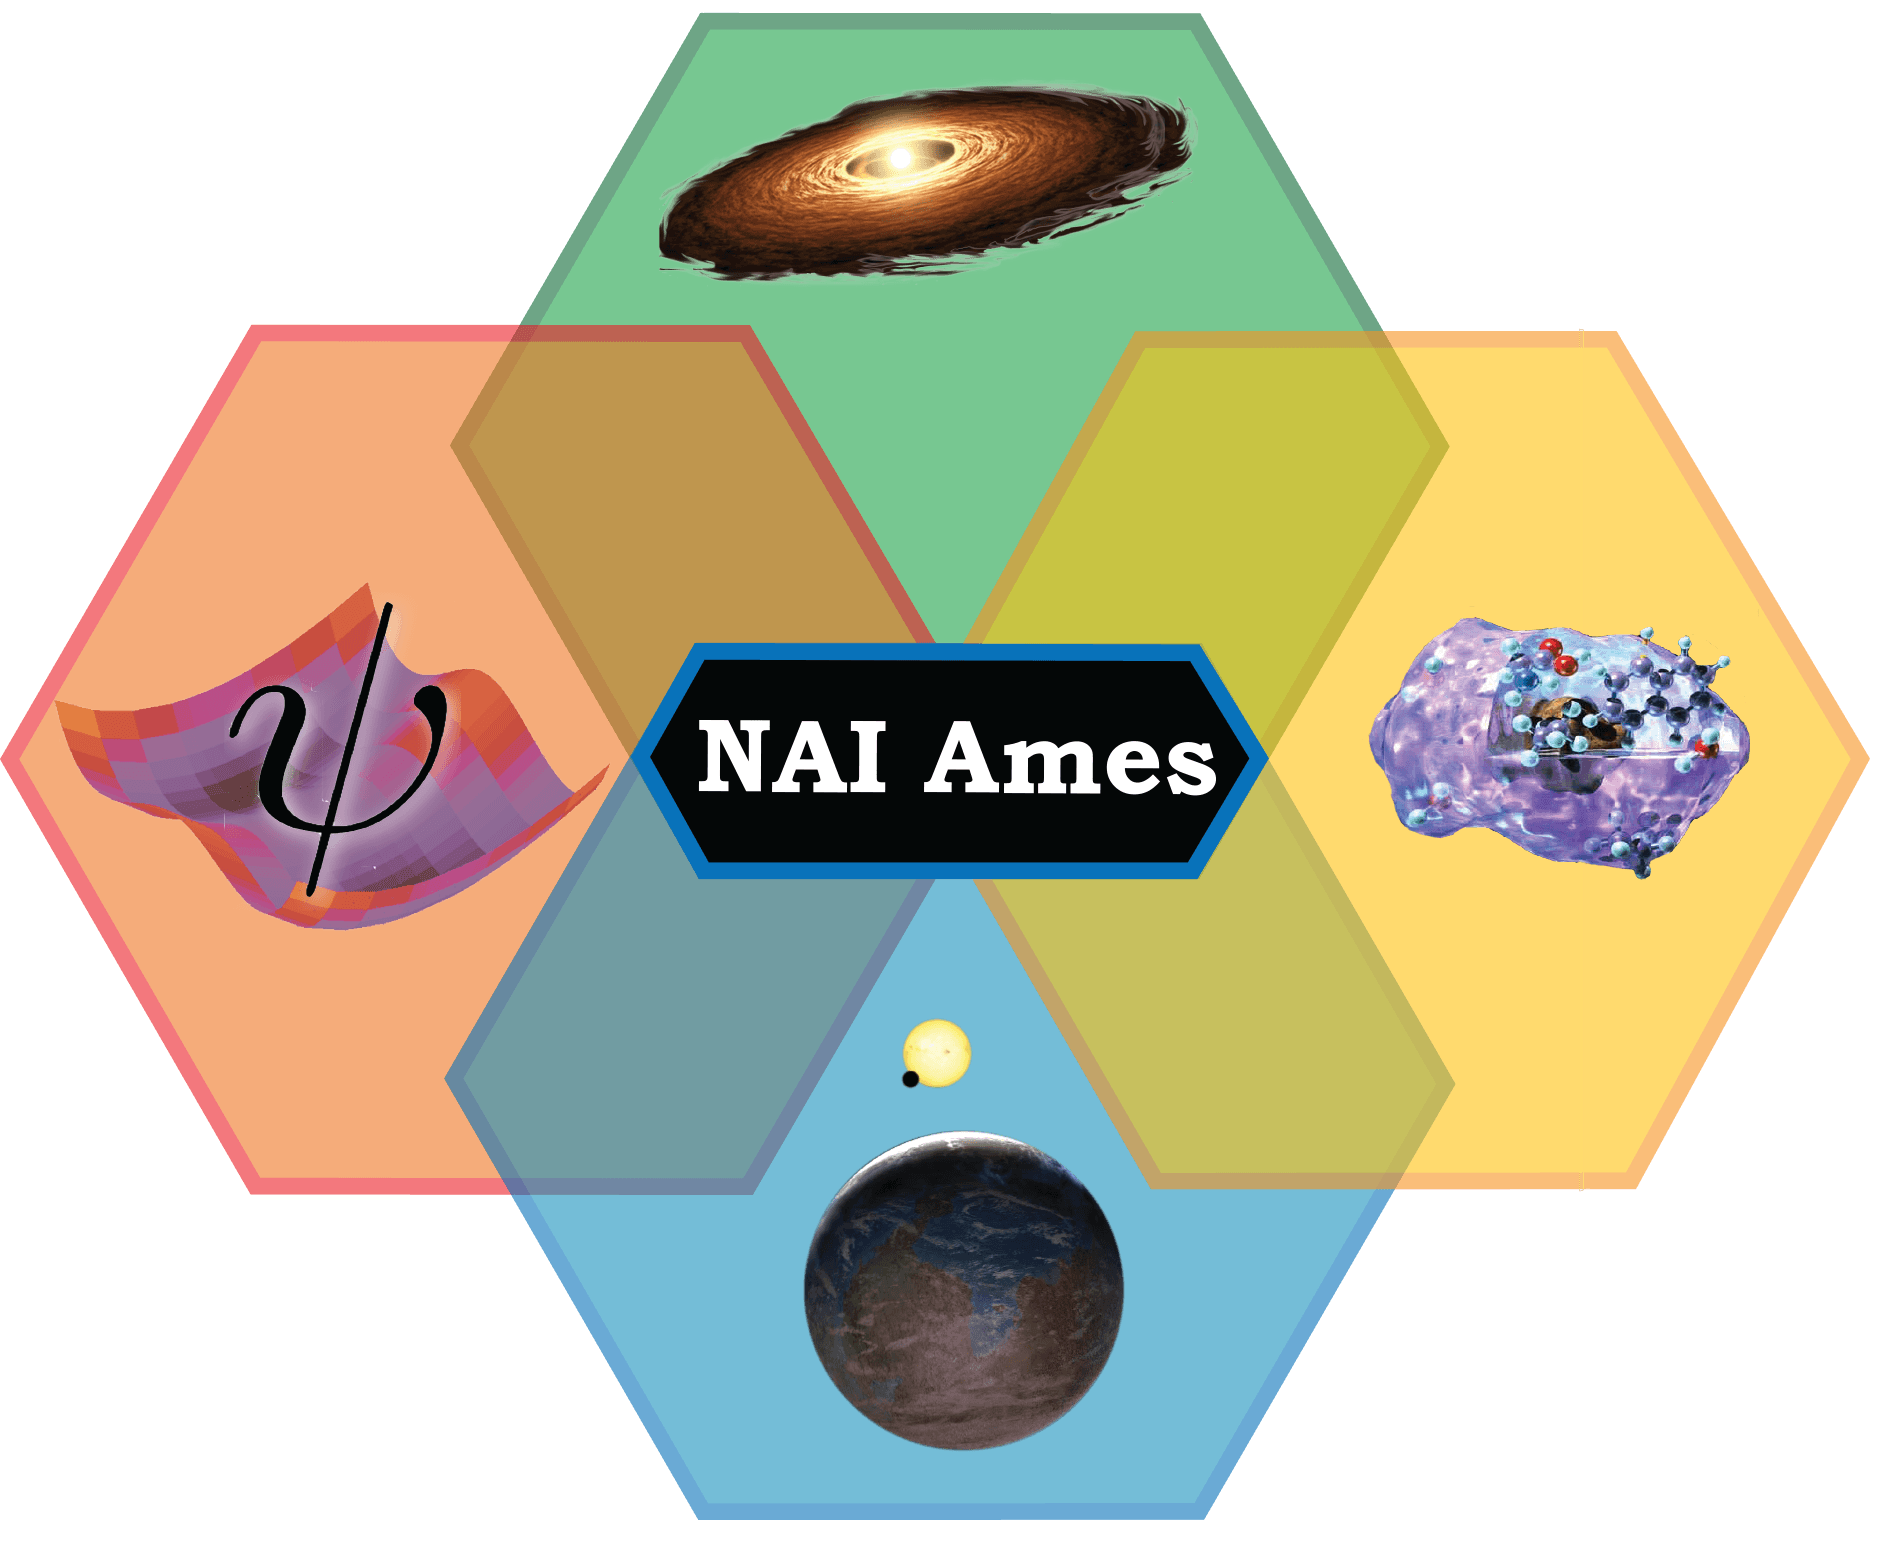 NASA Ames Logo - NASA Ames Research Center - NAI Team